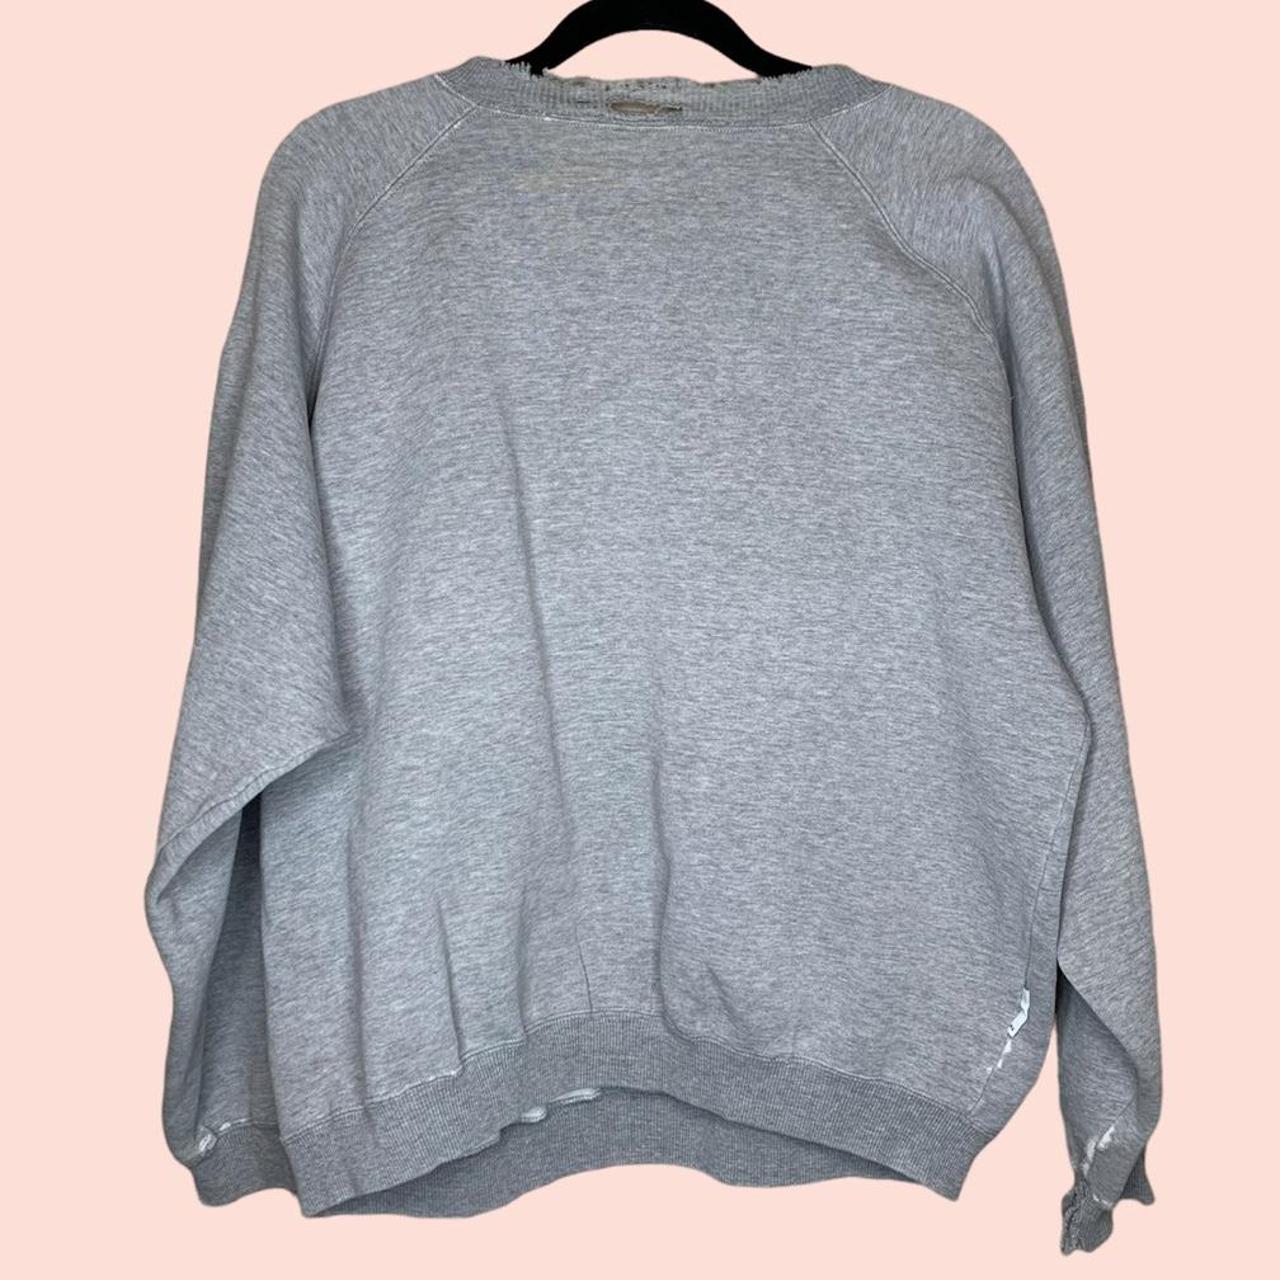 Acme Clothing Men's Grey Sweatshirt (2)